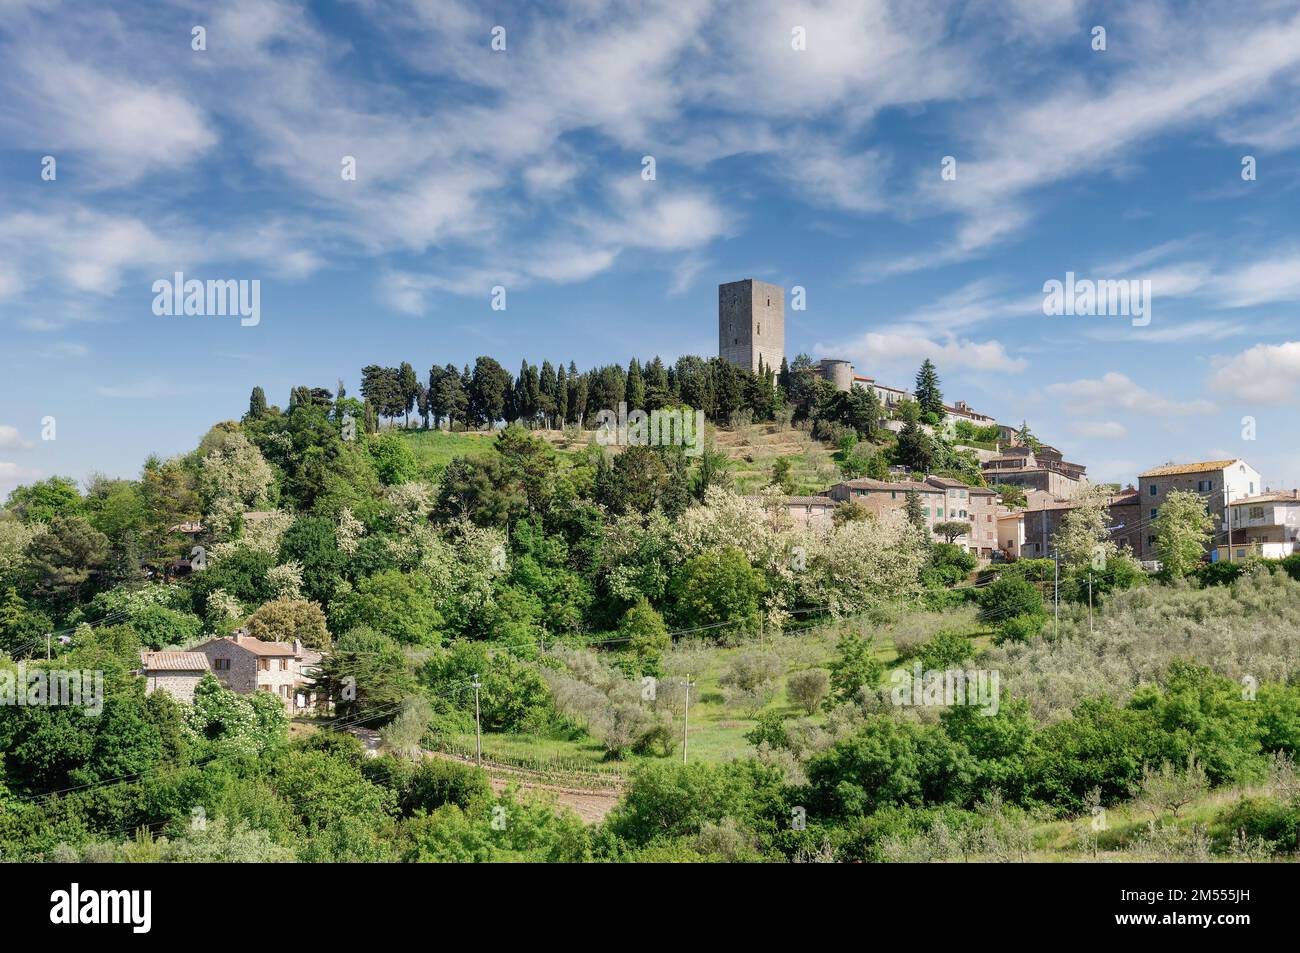 Village of Montecatini Val di Cecina close to Volterra,Tuscany,Italy Stock Photo